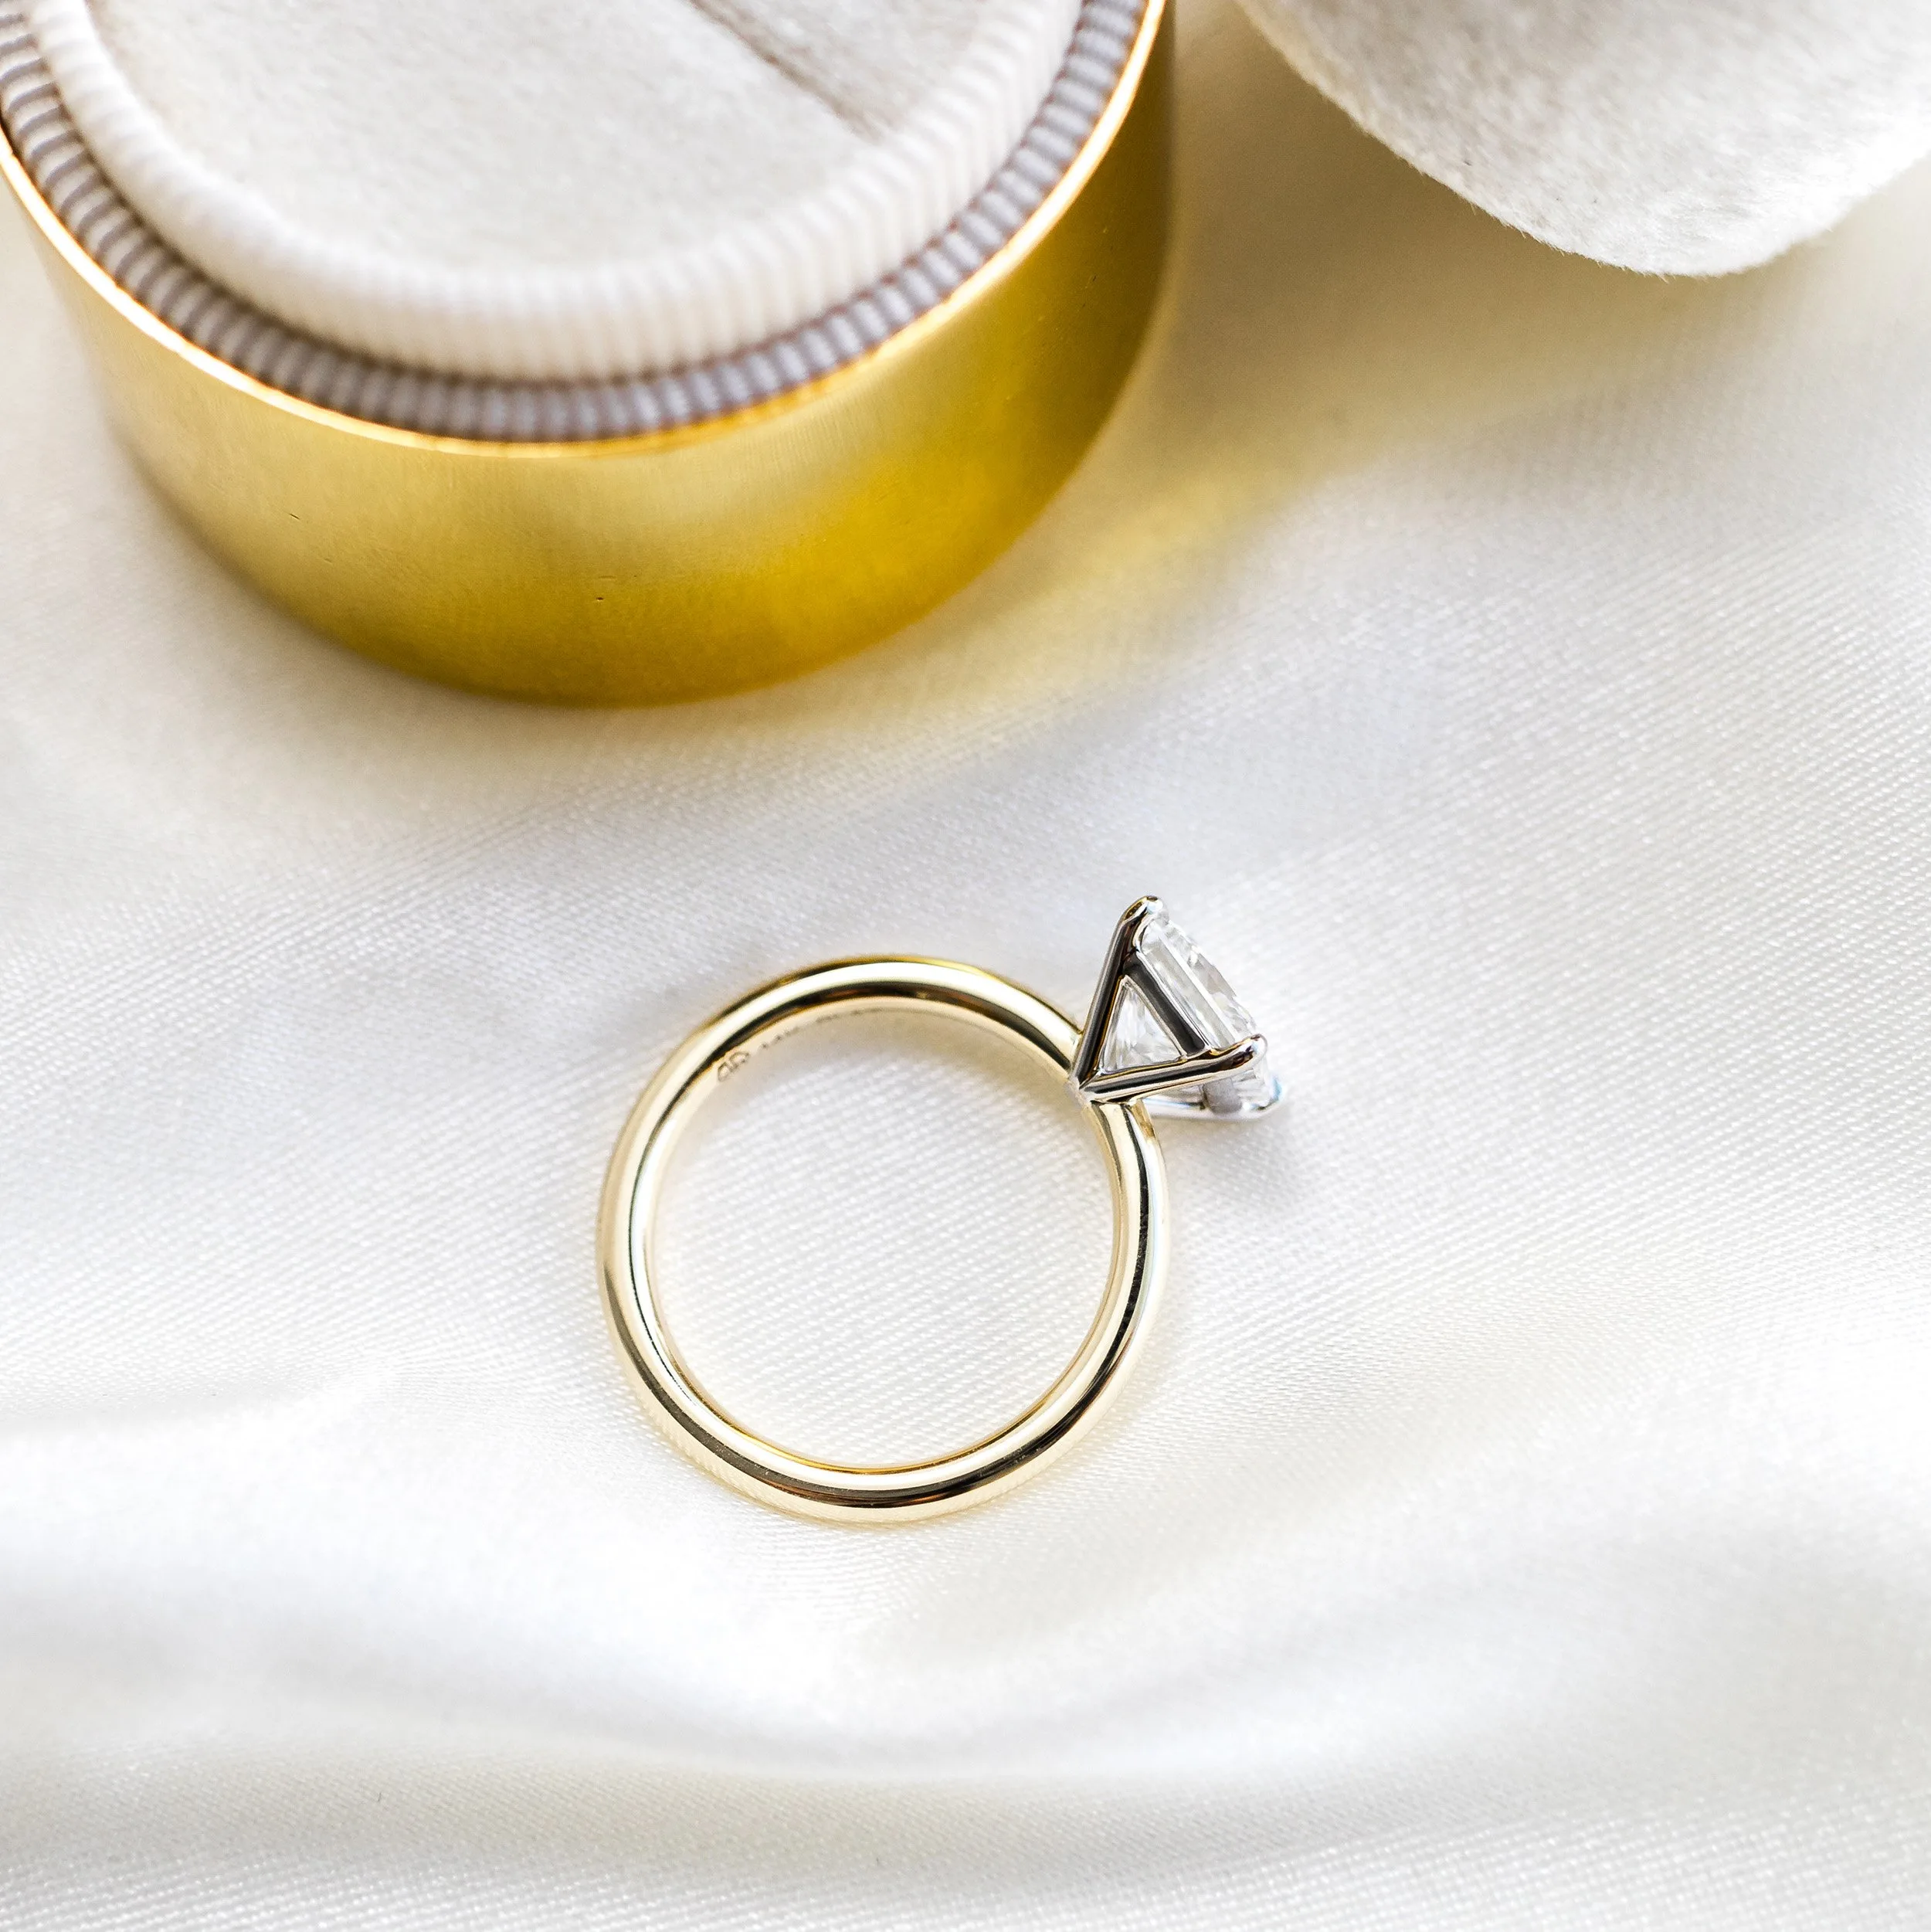 platinum and yellow gold 1.5ct princess cut lab diamond solitaire engagement ring ada diamonds design ad 341 profile view